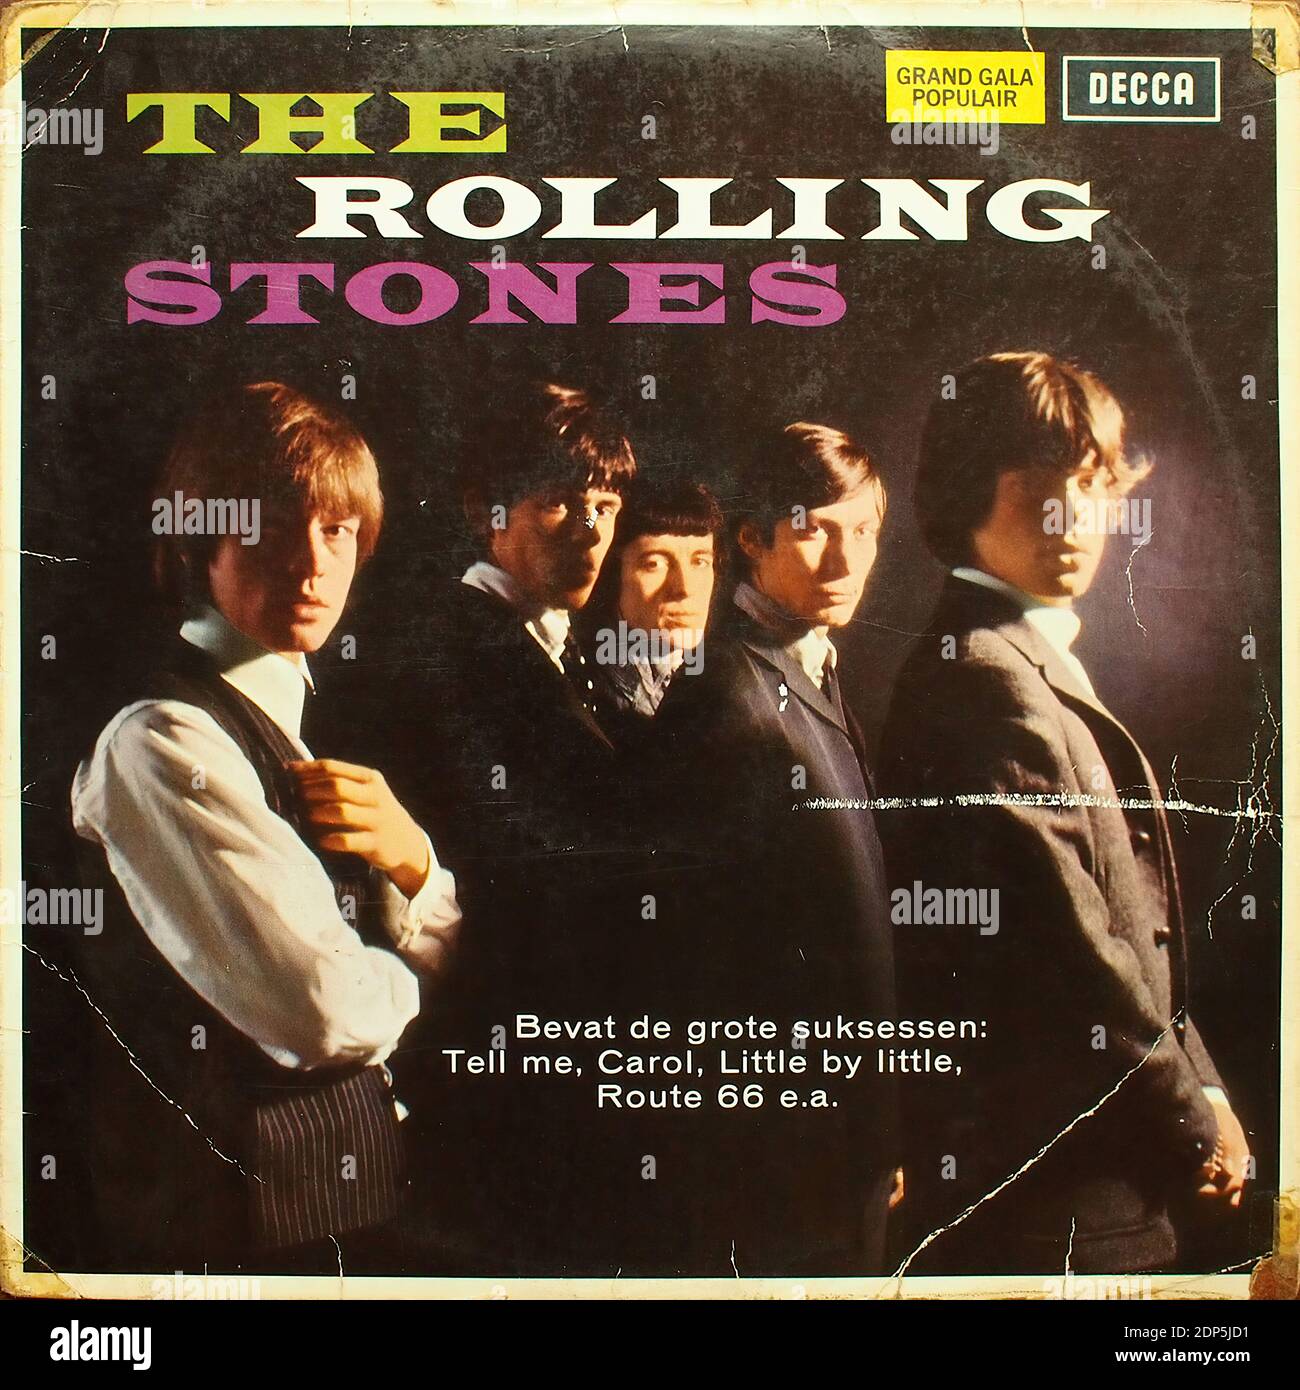 The Rolling Stones, Decca 625 384 QL, 1964 - Vintage vinyl album cover  Stock Photo - Alamy